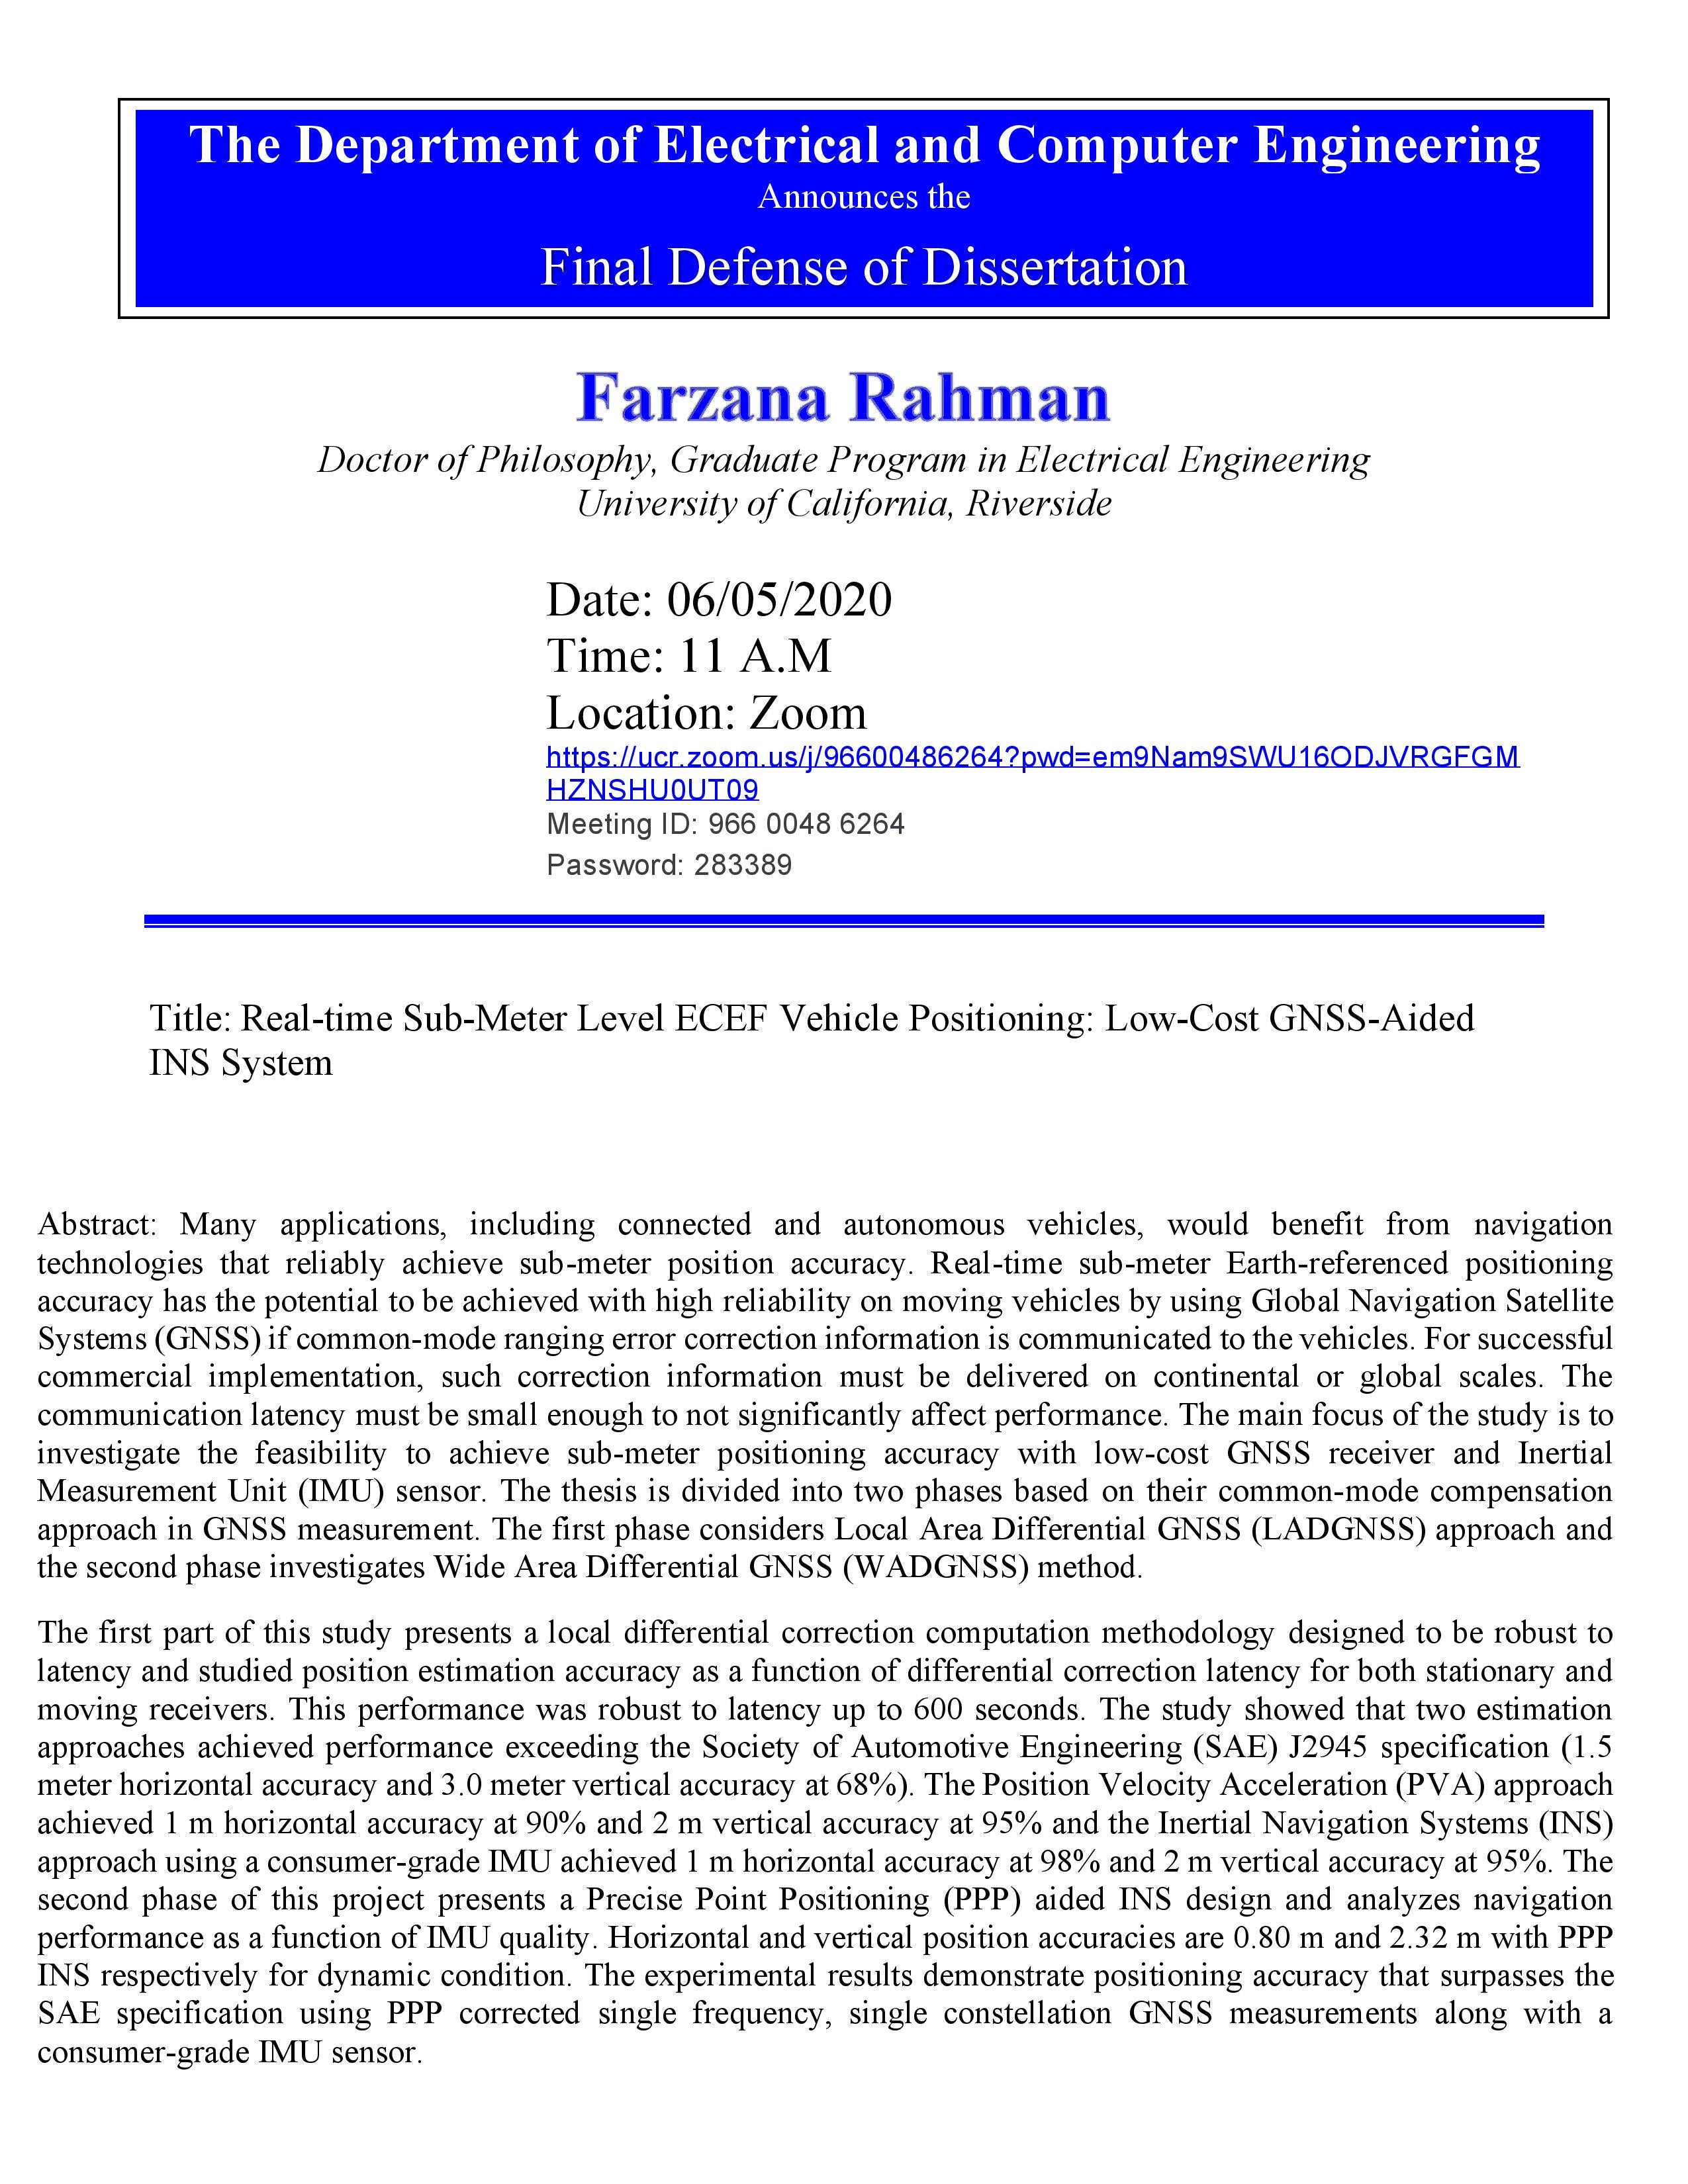 Rahman, Farzana Dissertation Defense Flyer